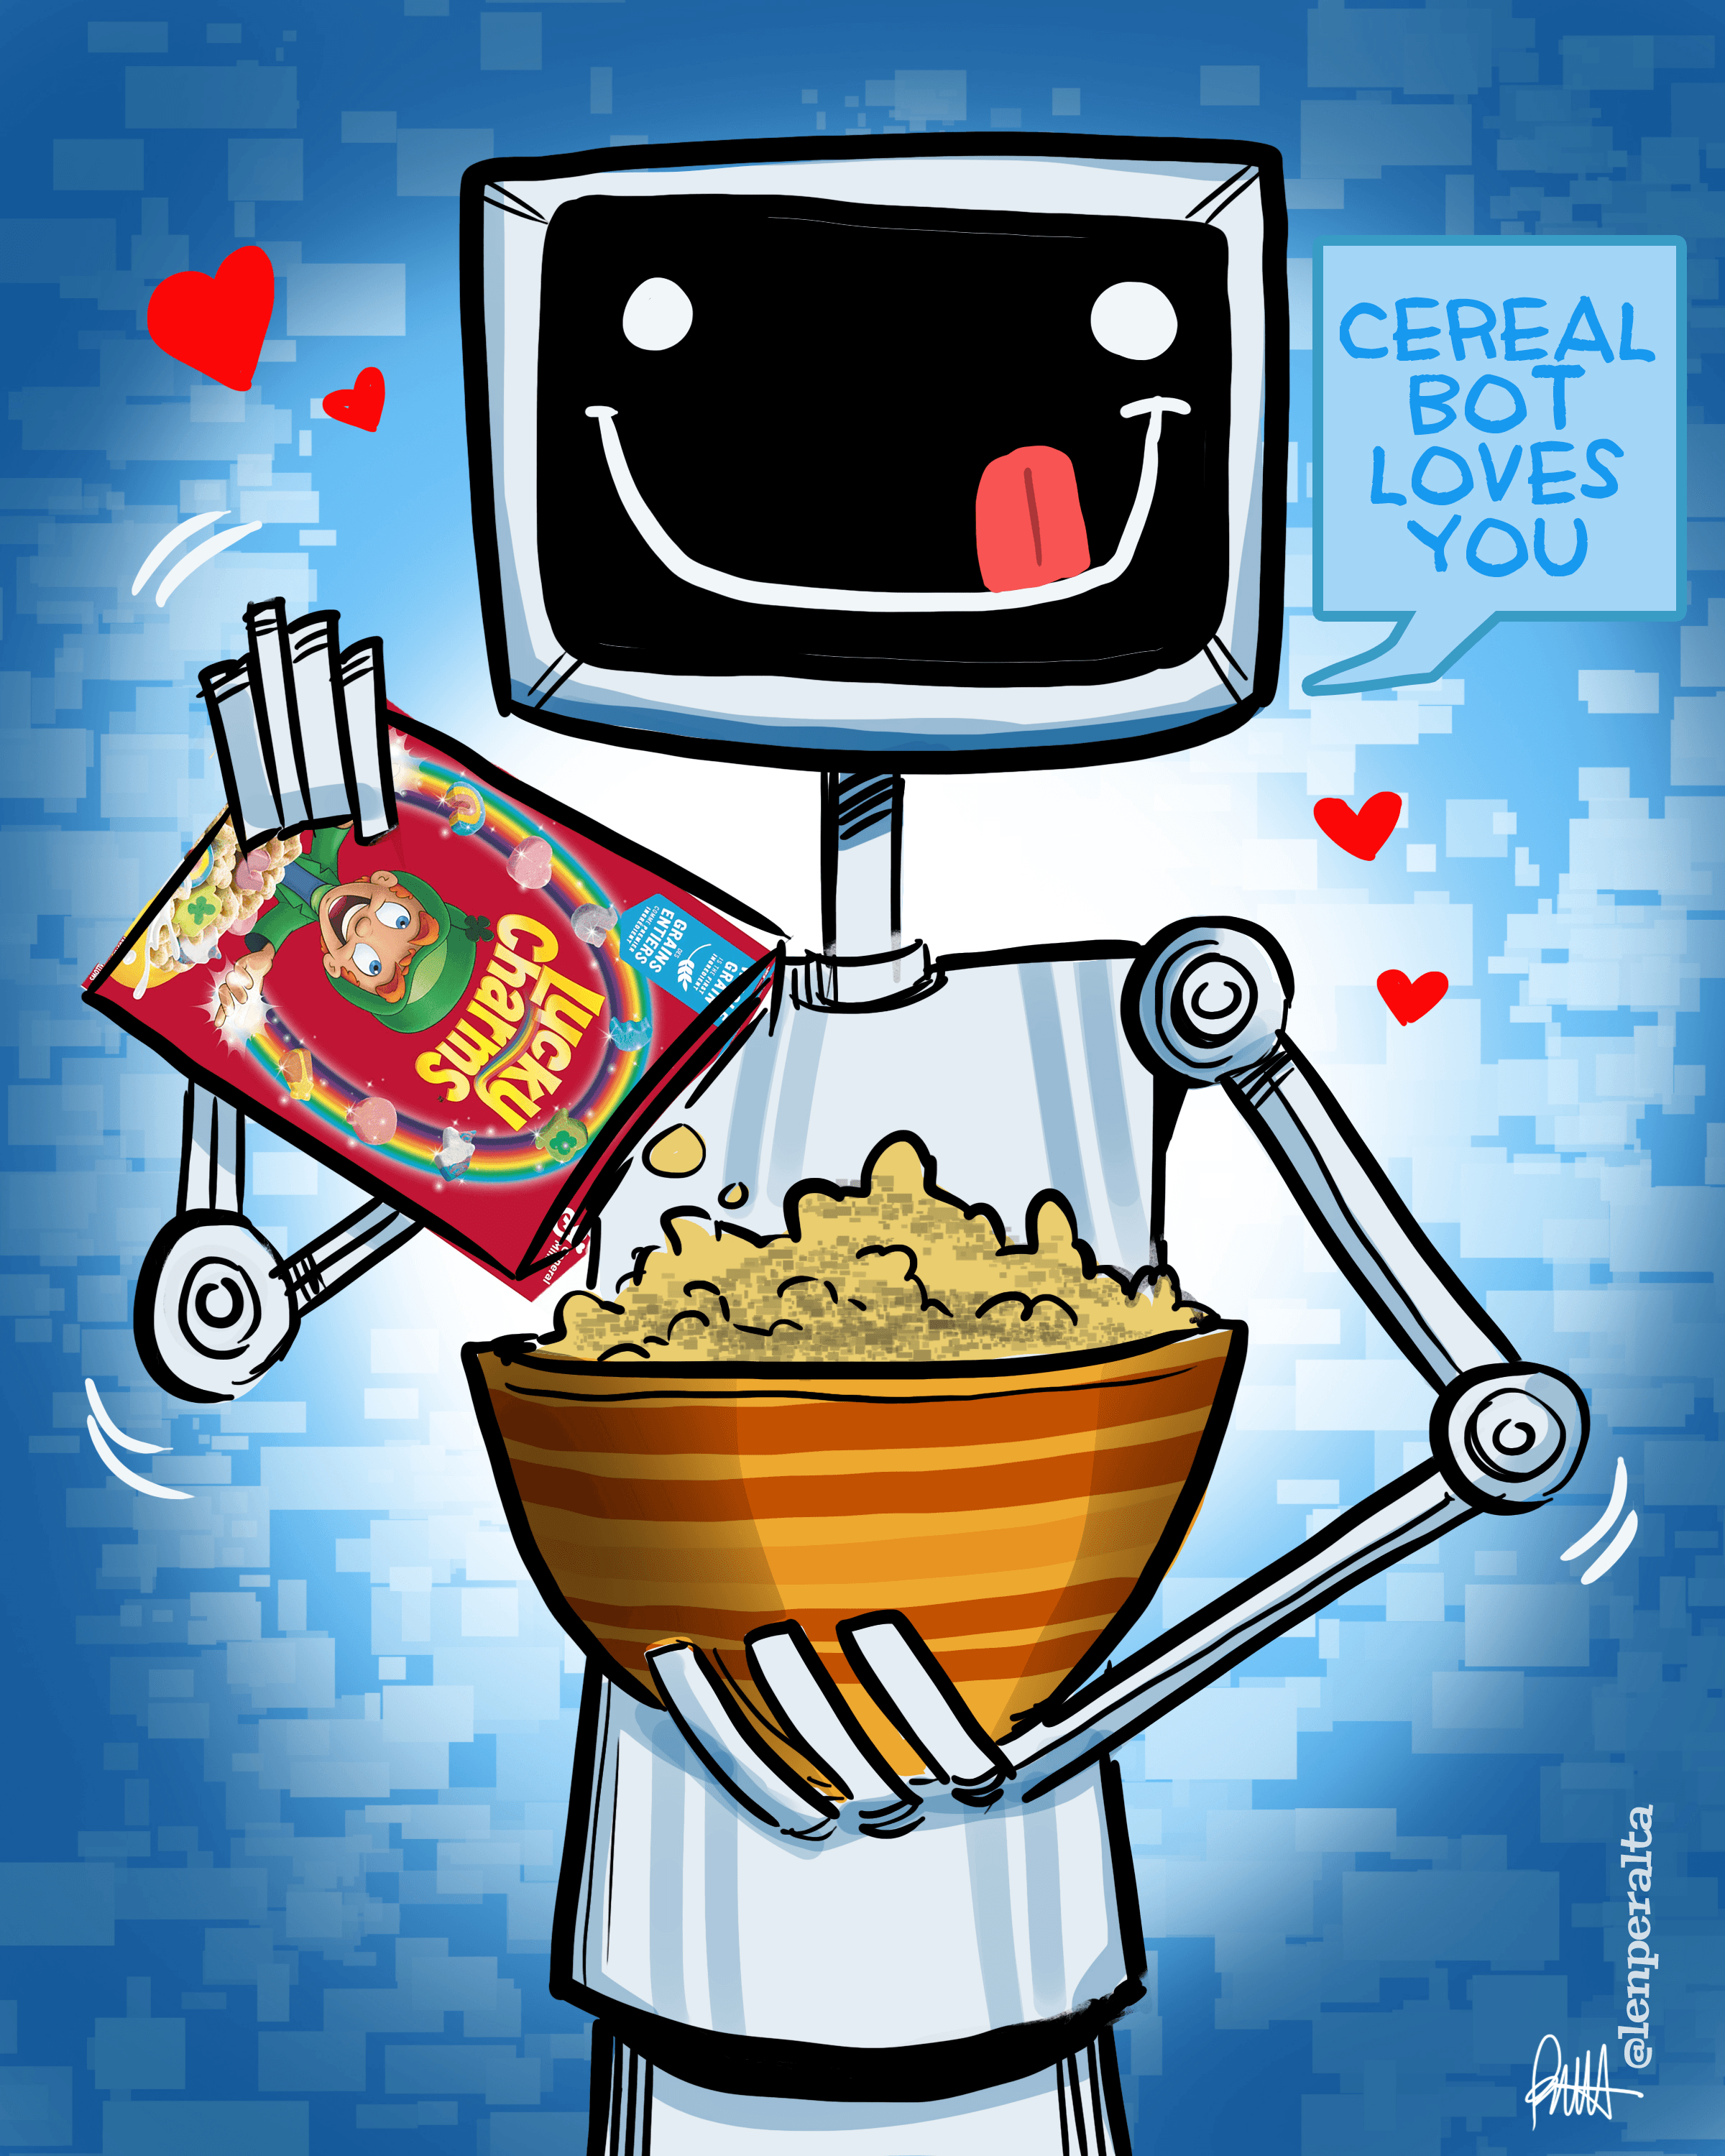 CerealBot